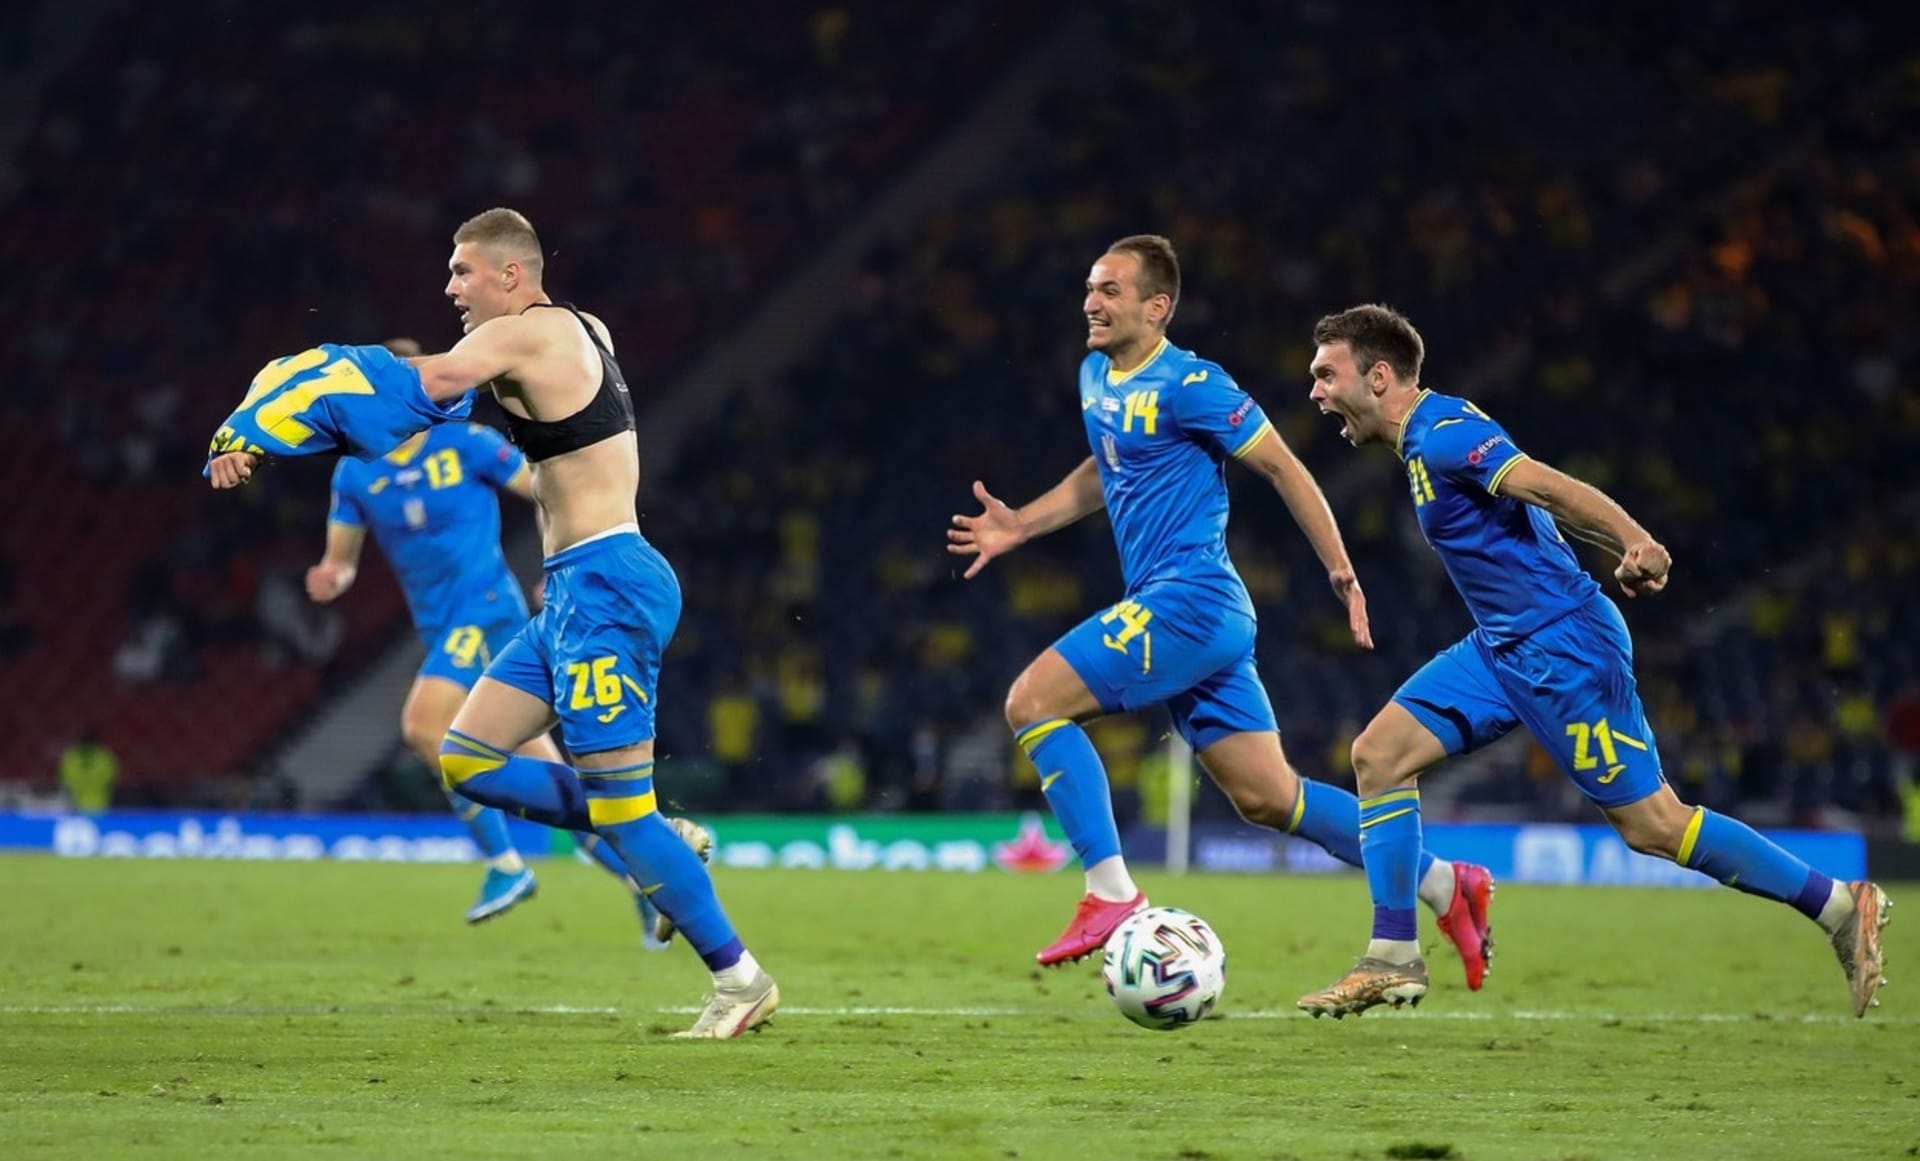 Ukrajina si na Euru zahraje čtvrtfinále s Anglií.